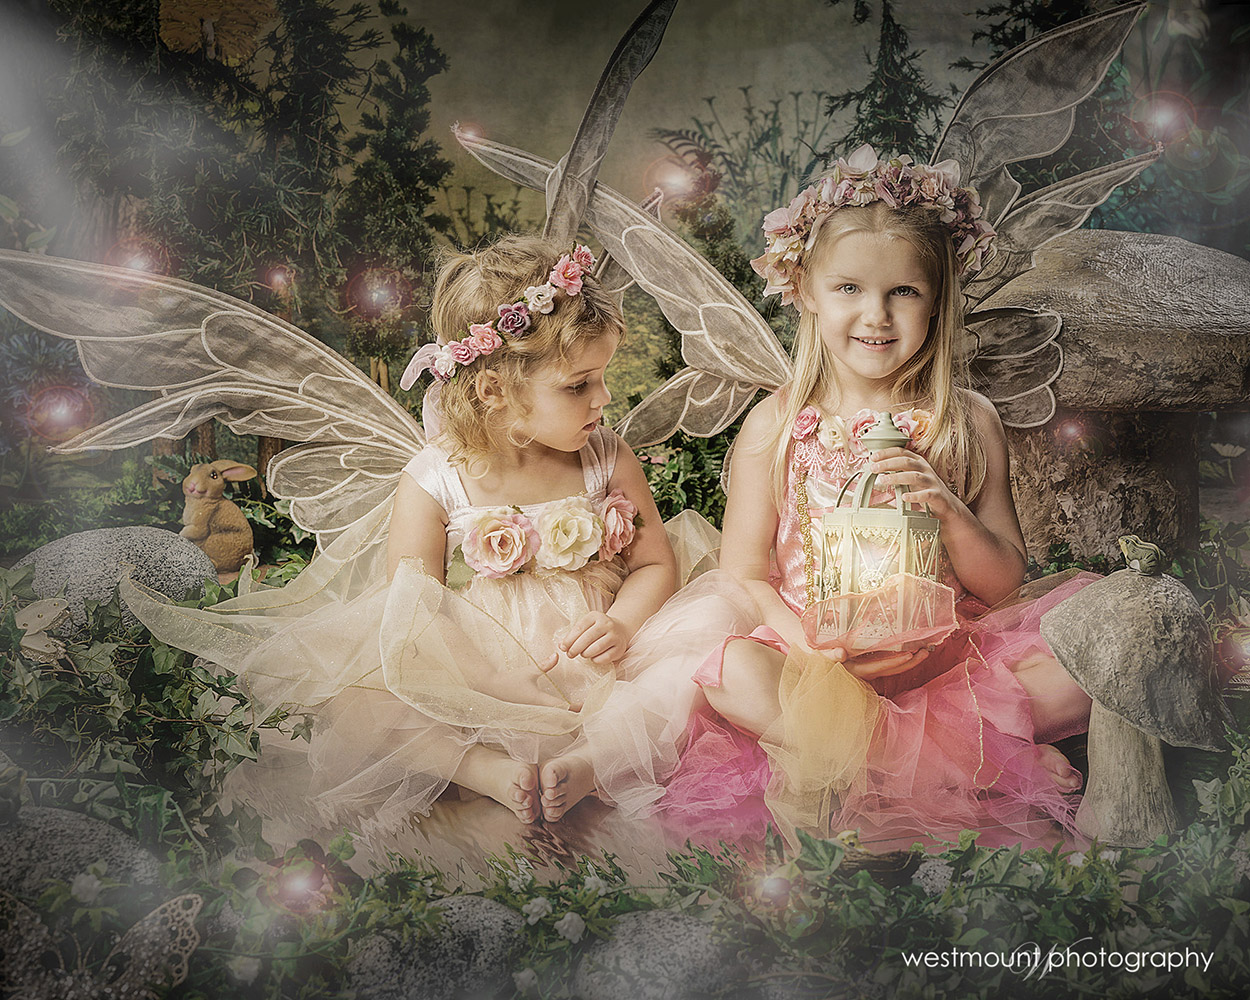 Beautiful sister fairy photo shoots…